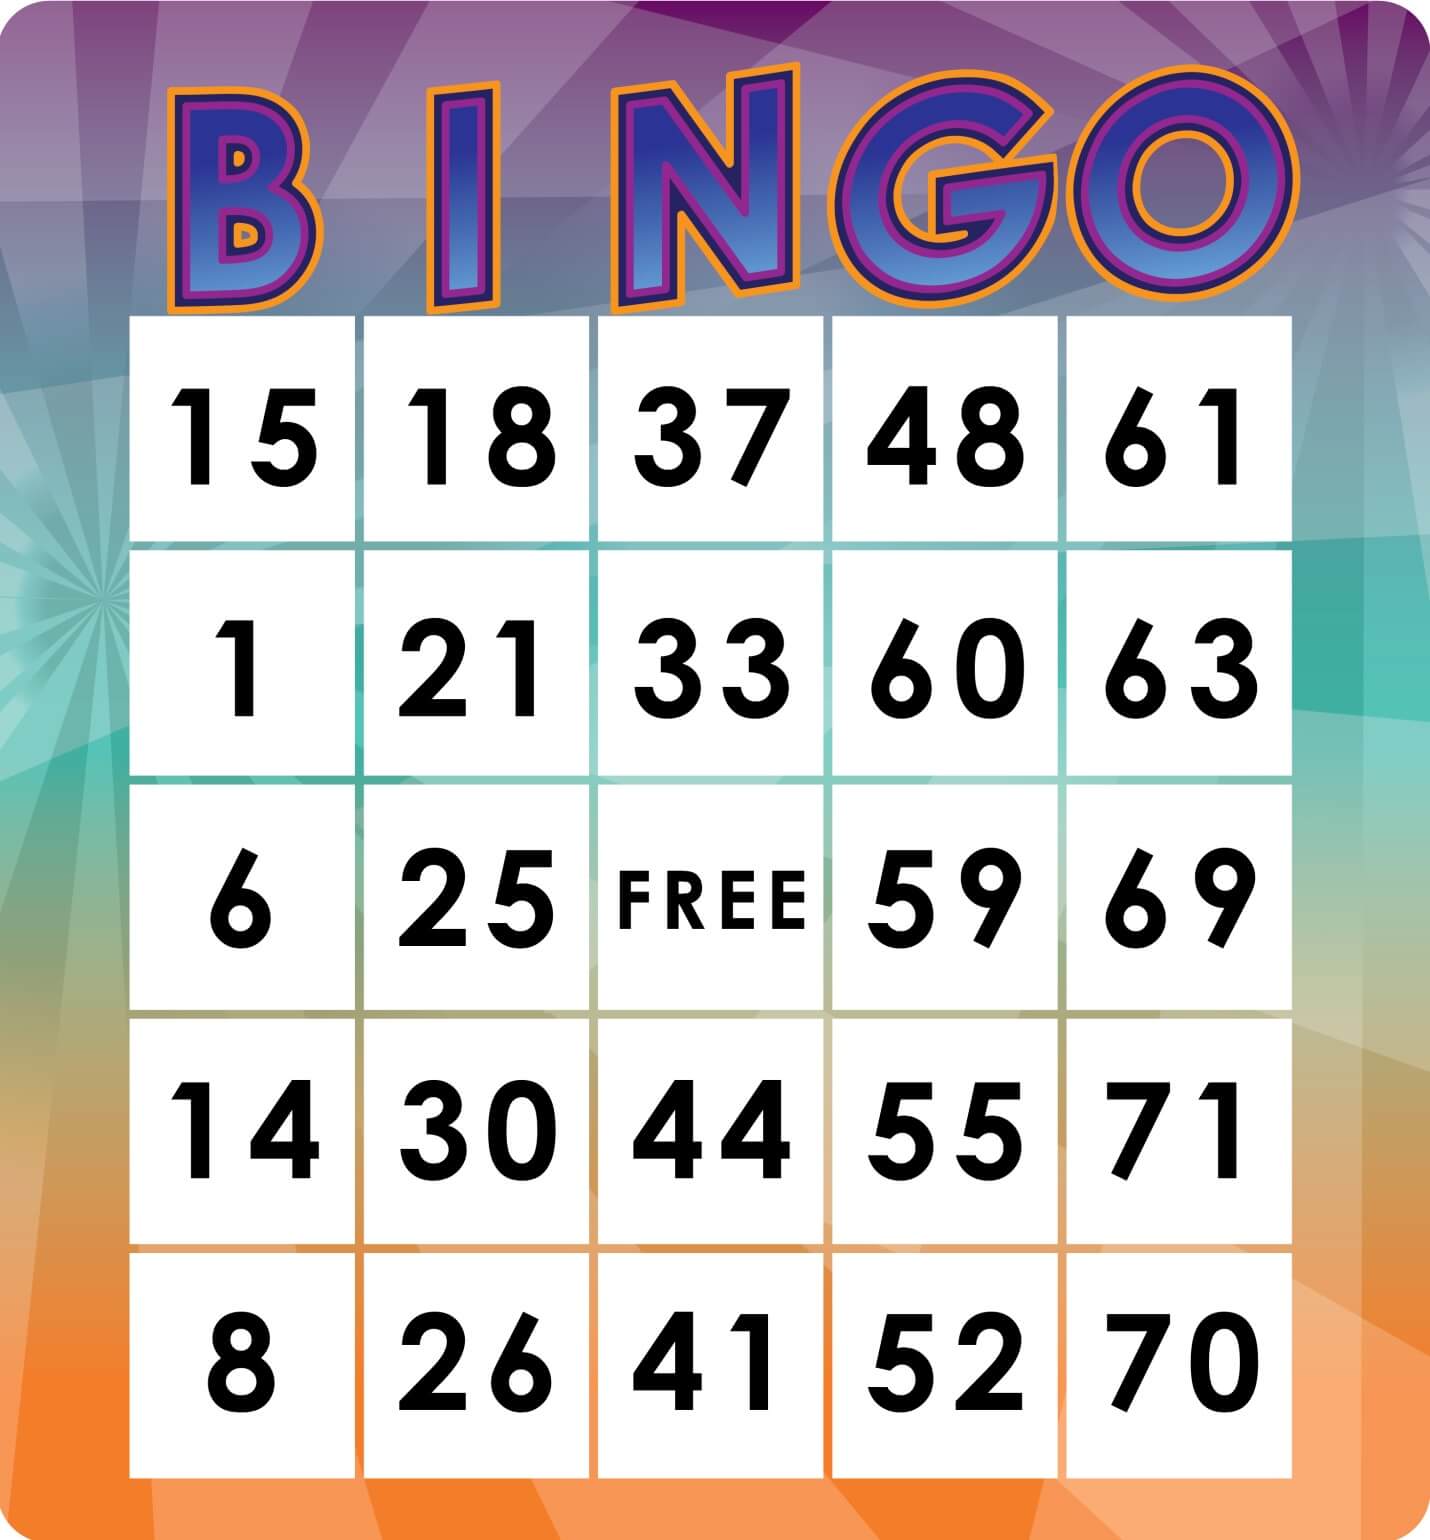 bingo-board.jpg